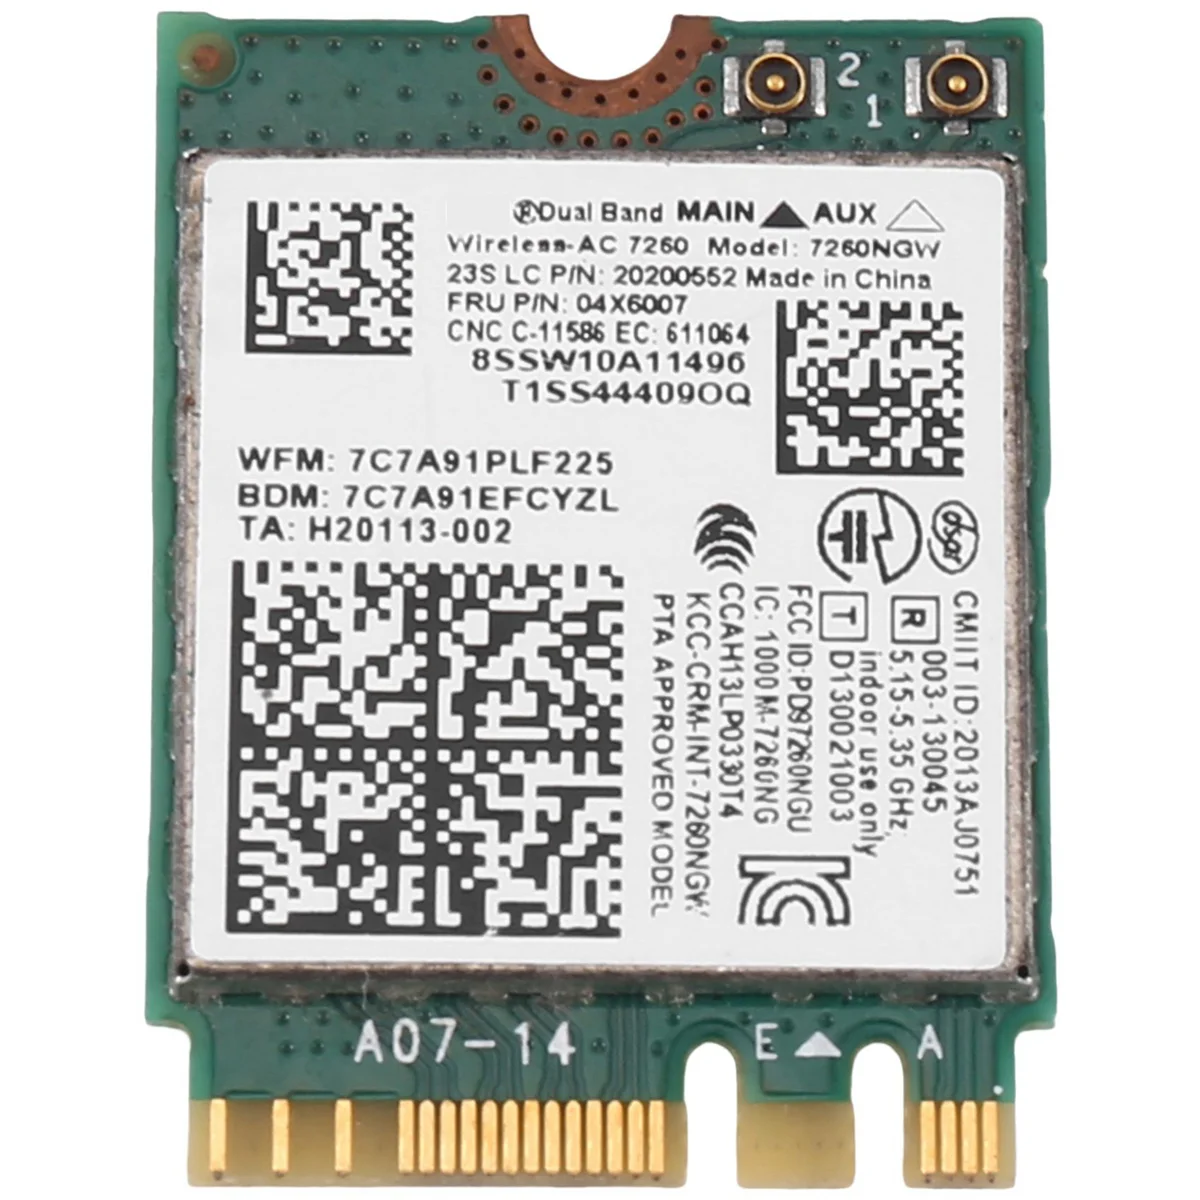 7260NGW 7260AC WiFi Card 2.4G/5G BT4.0 Fru 04X6007 for Thinkpad X250 X240 X240S X230S T440 W540 T540 Yoga Y50